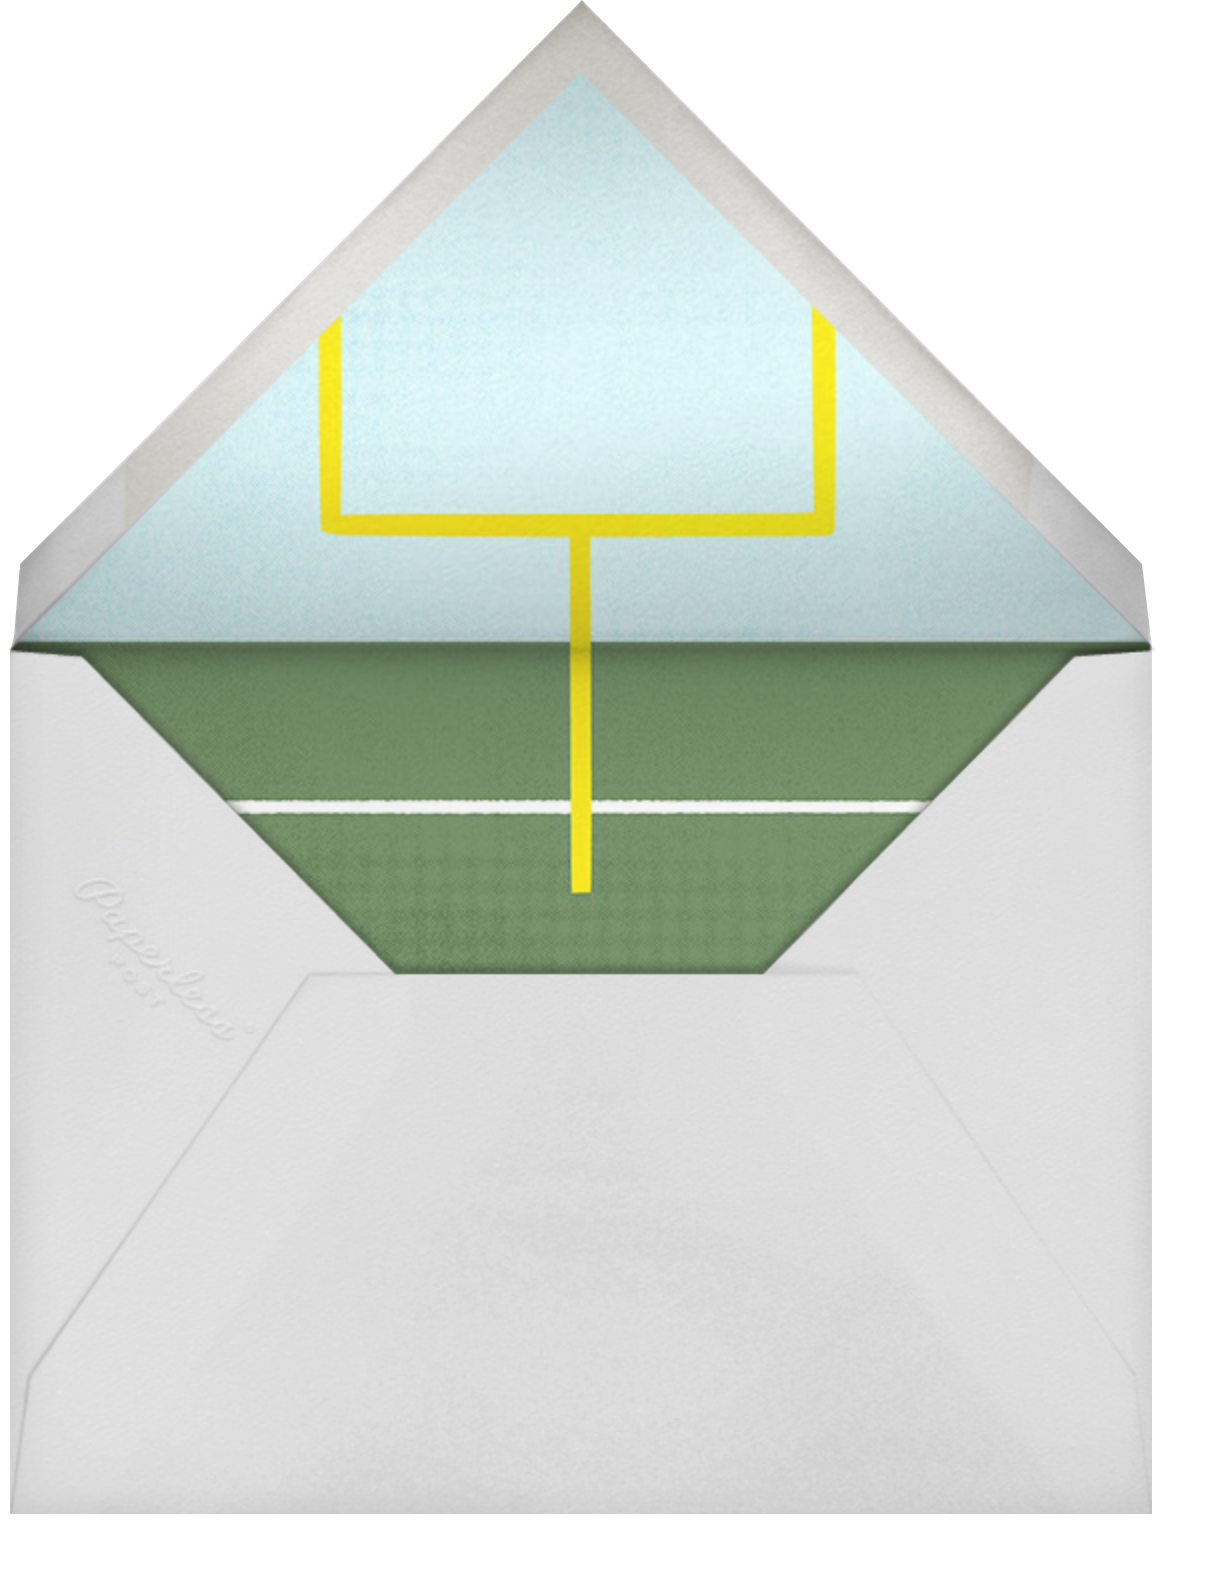 Courtside Seats - Football - Paperless Post - Envelope